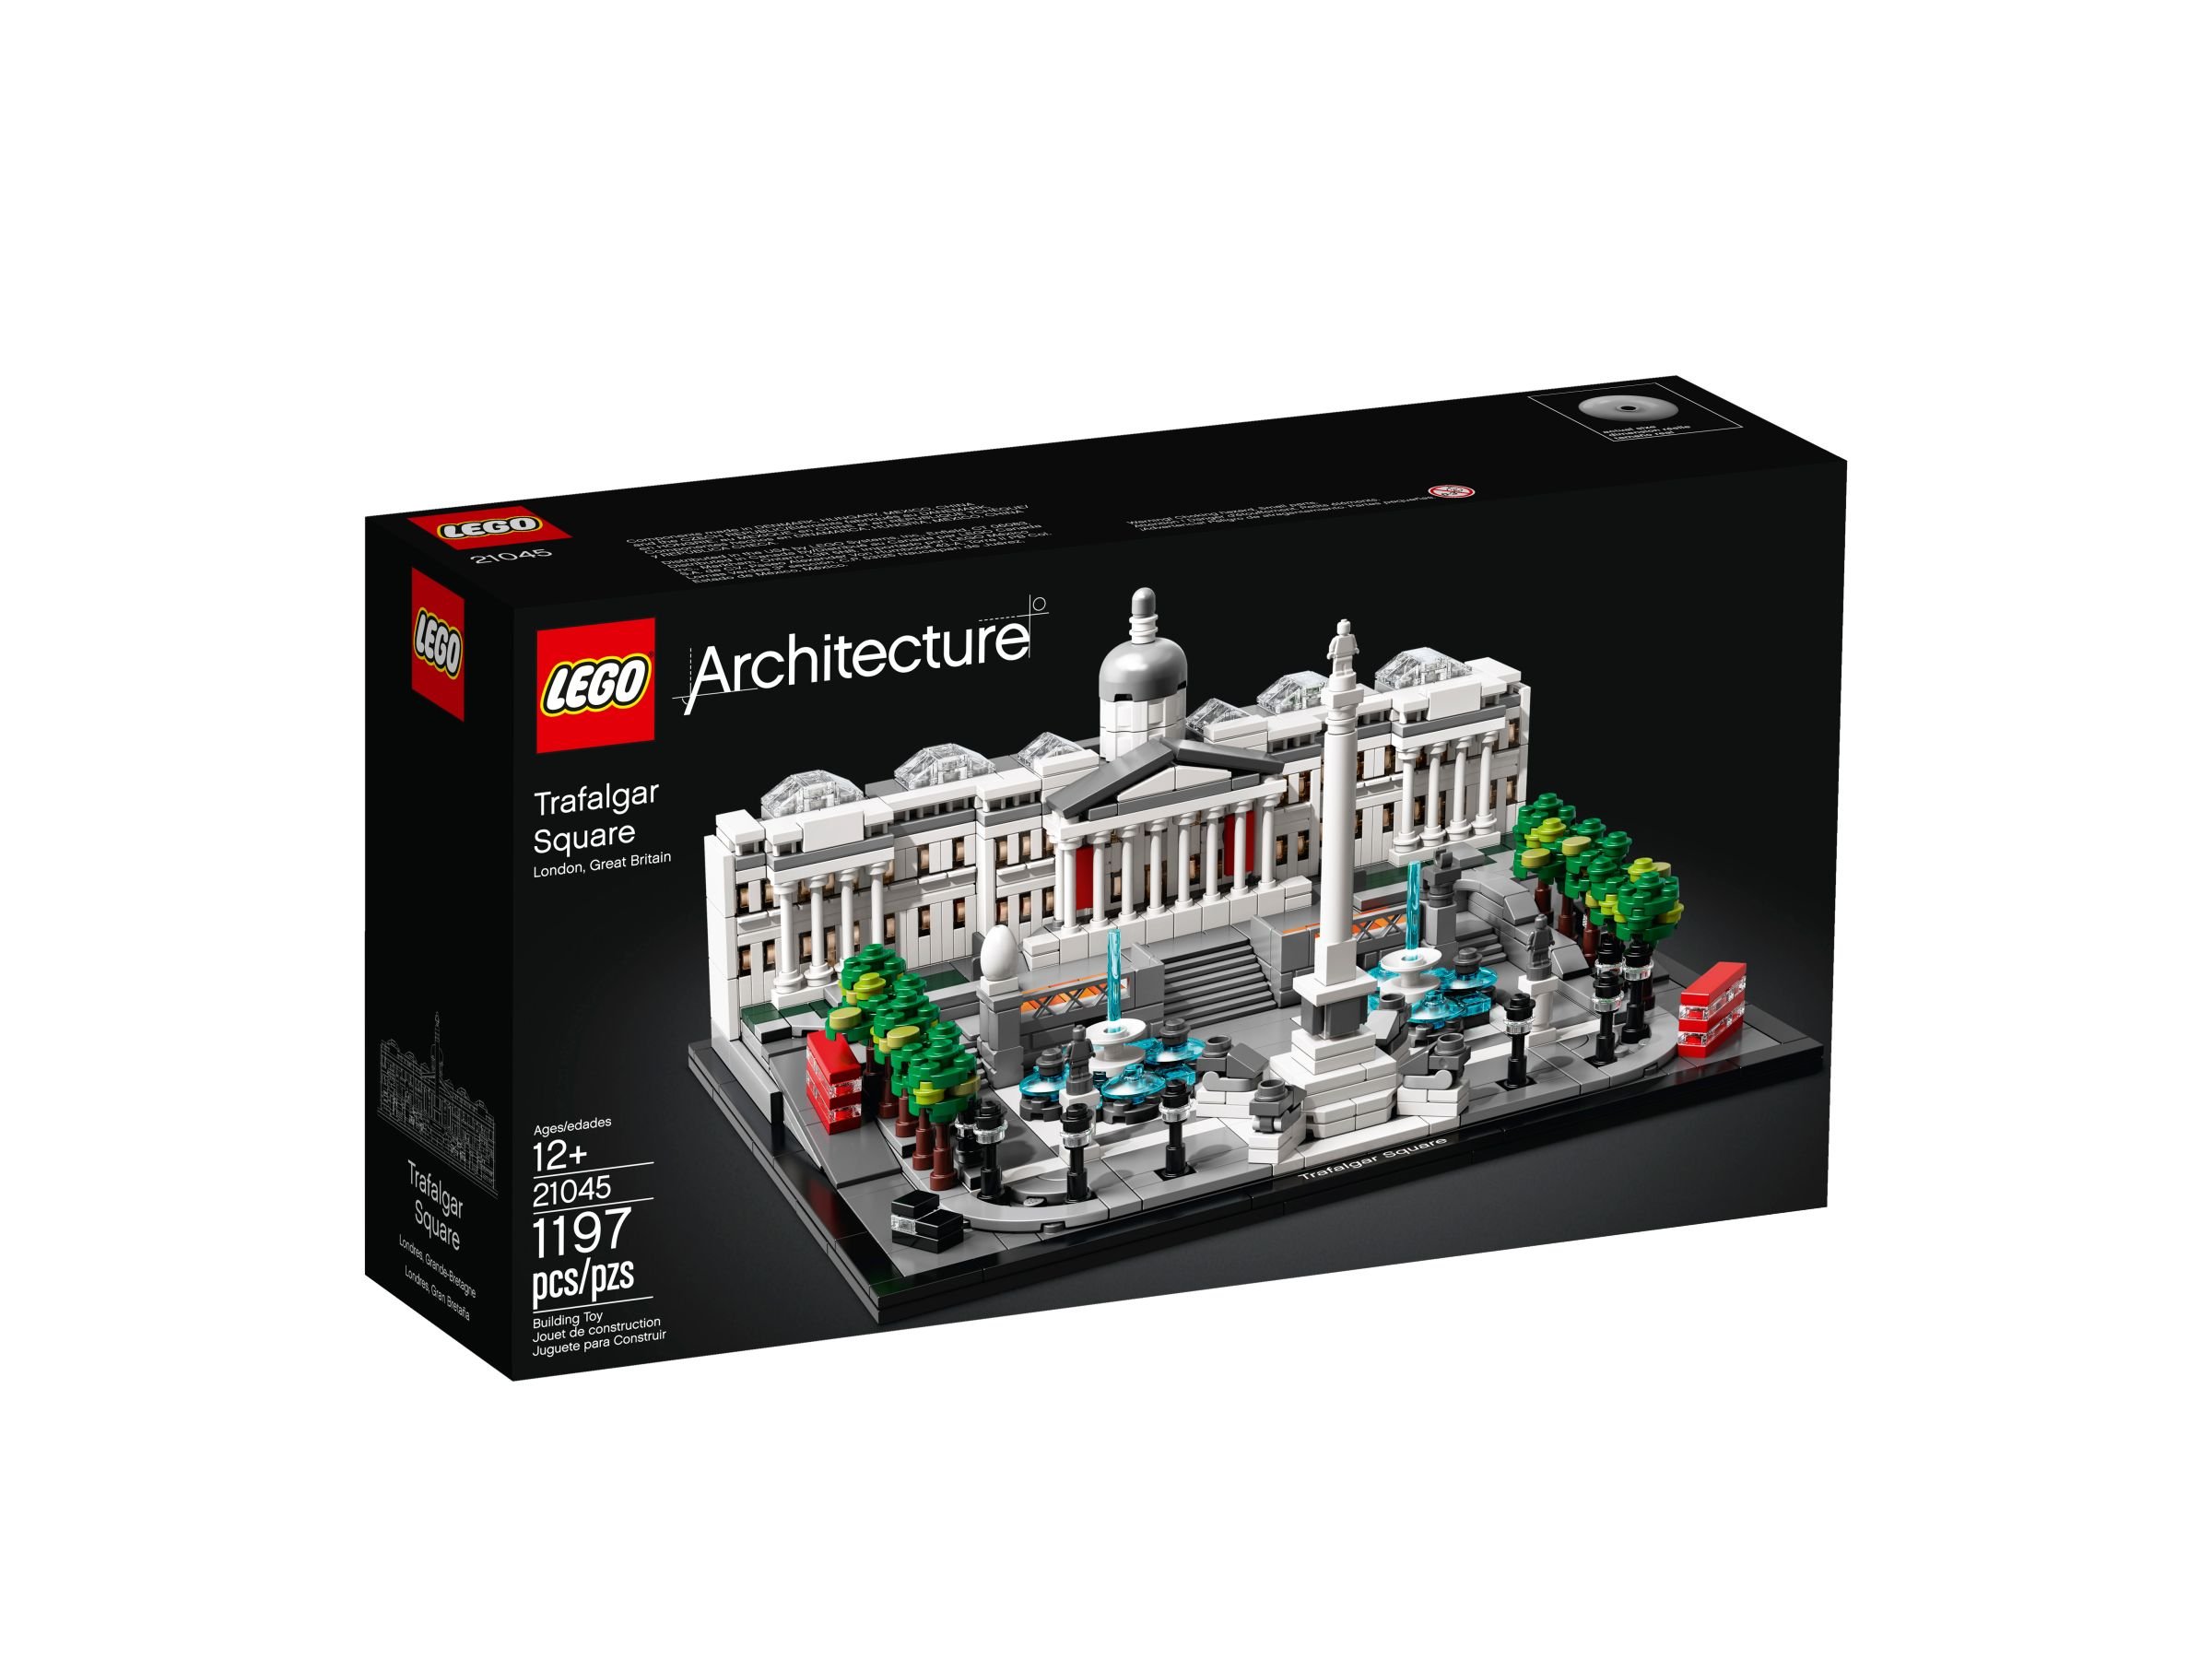 LEGO Architecture 21045 Trafalgar Square LEGO_21045_alt1.jpg